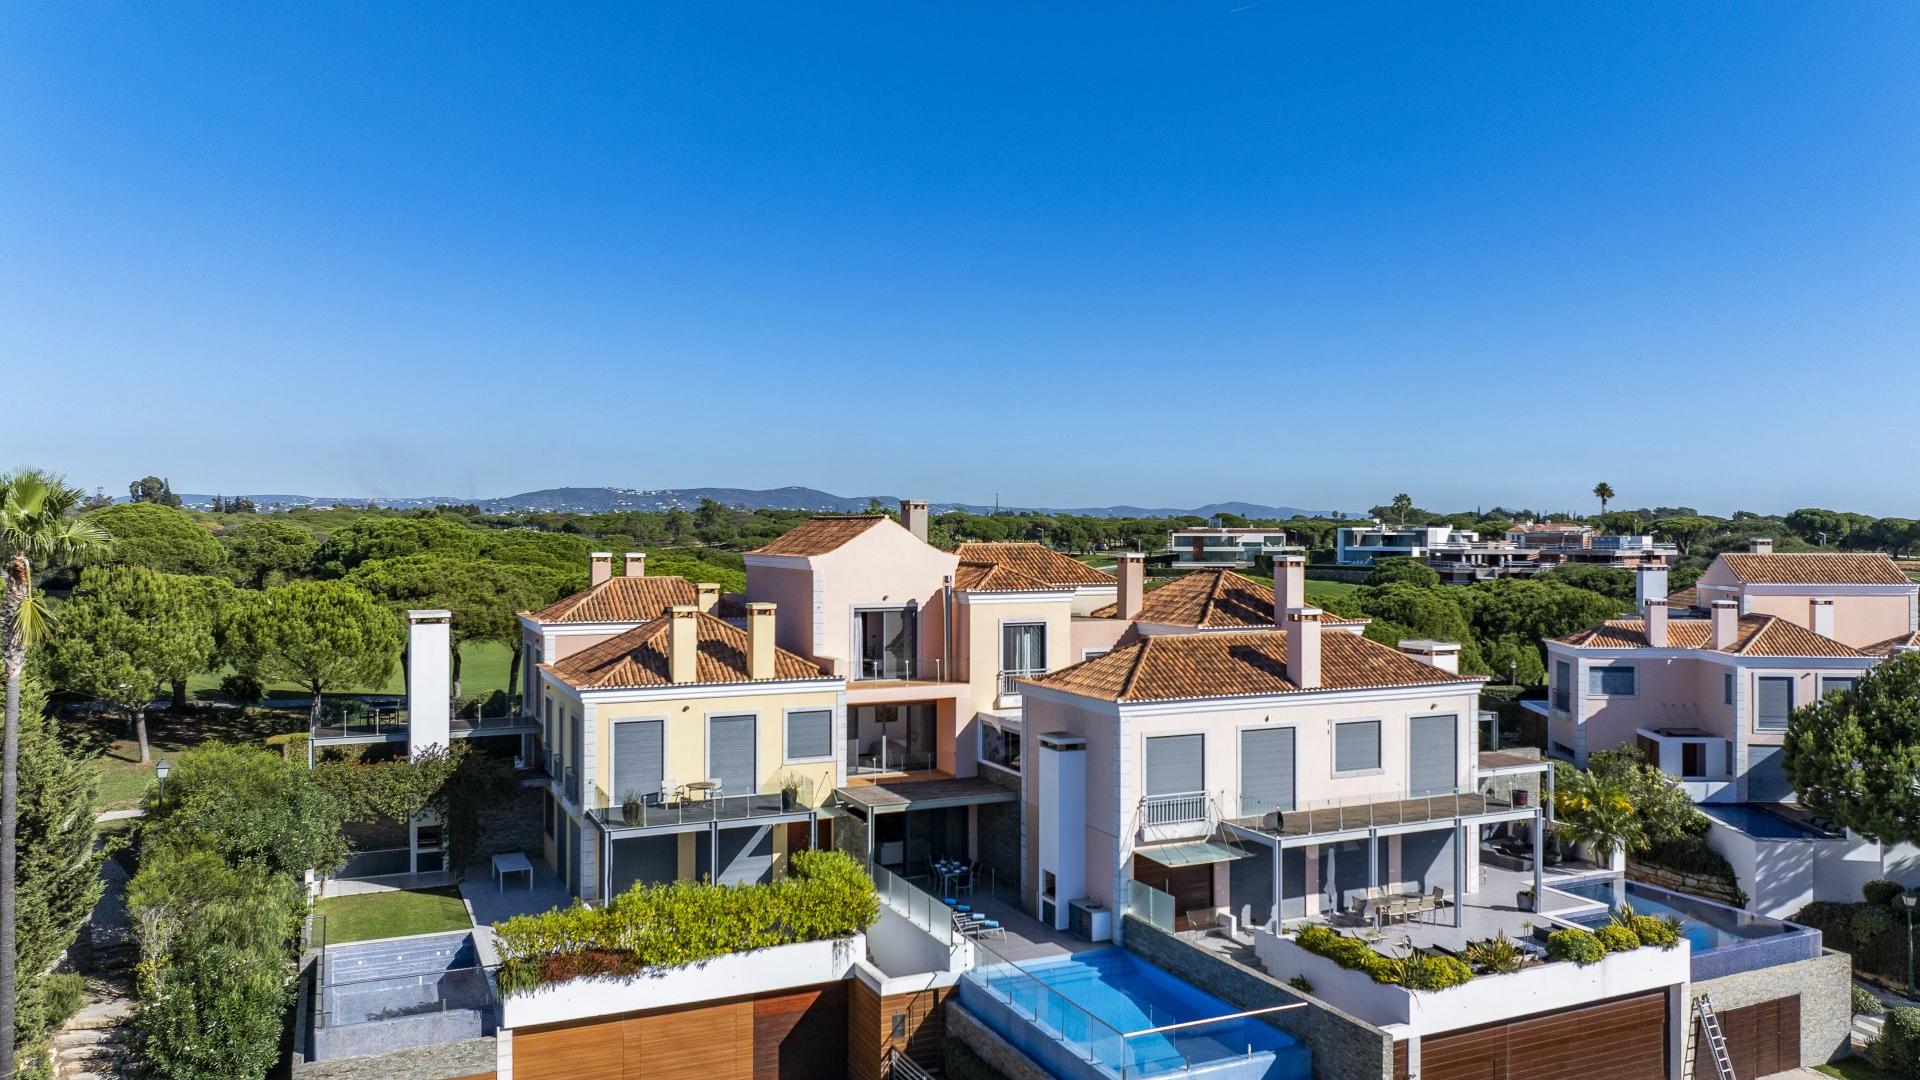 Casa Chic - Margarida Apartments, Vale do Lobo, Algarve - DJI_20231114113917_0142_D_RT.jpg